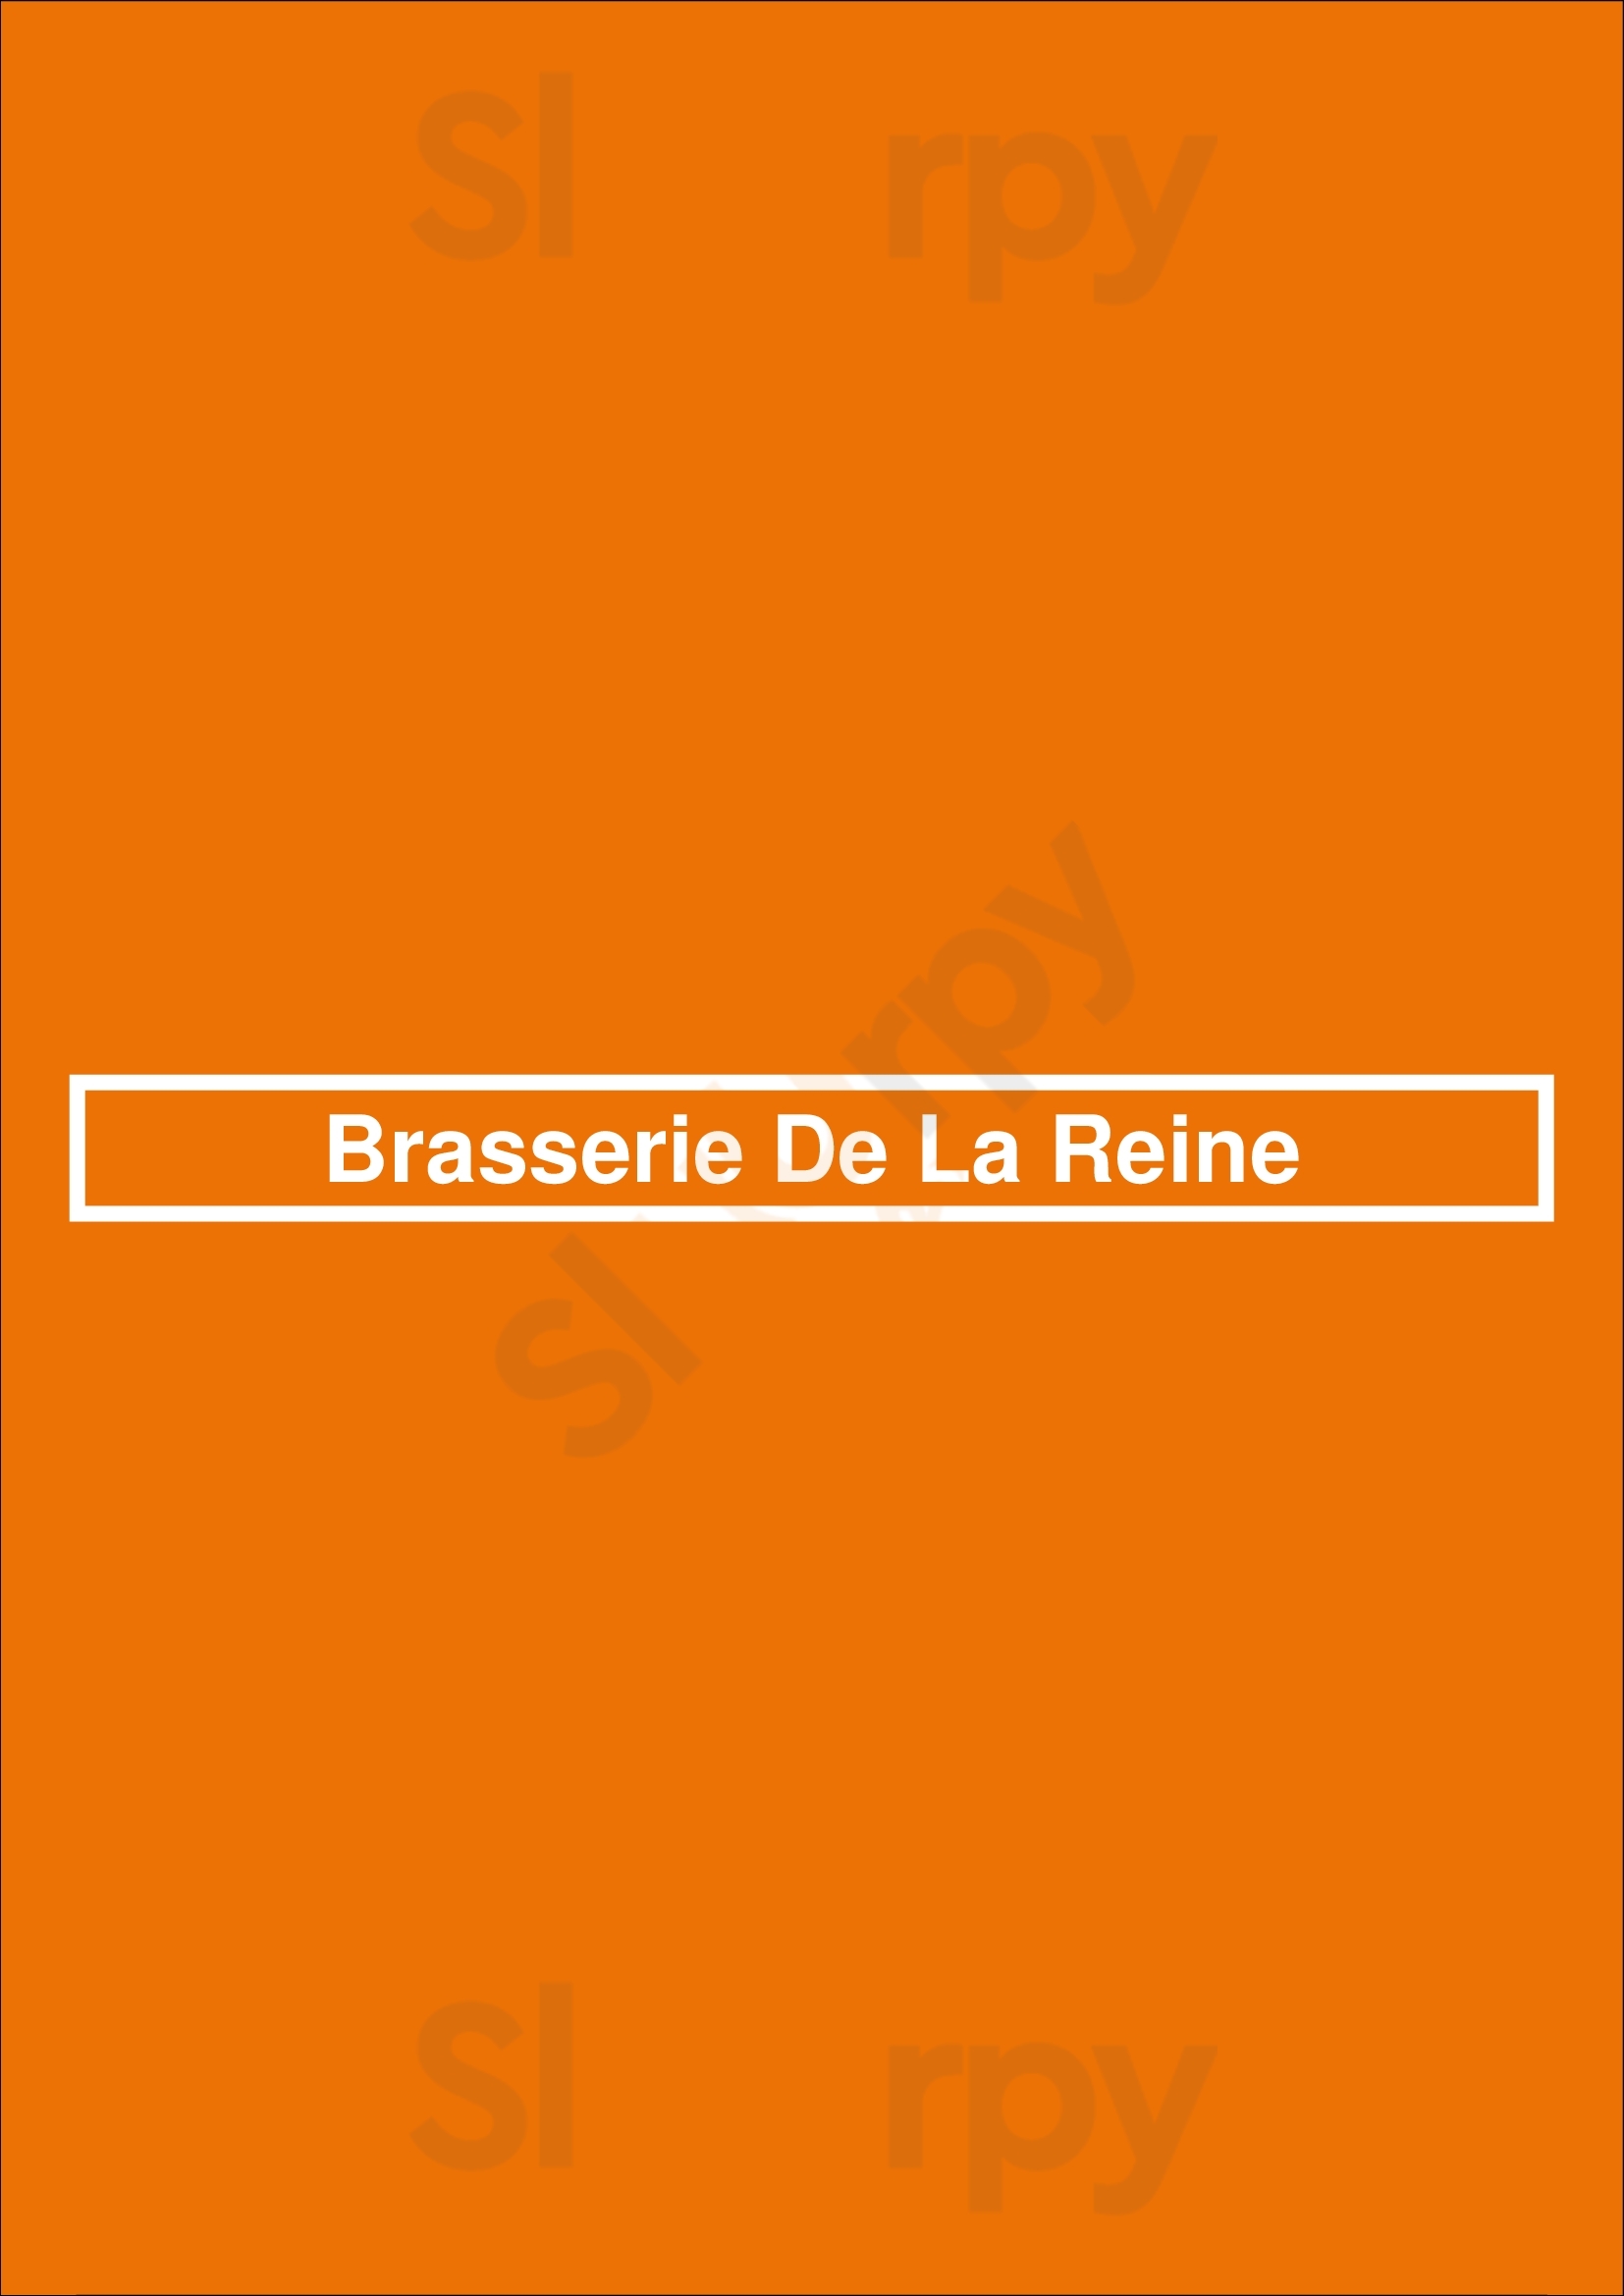 Brasserie De La Reine Bruxelles Menu - 1